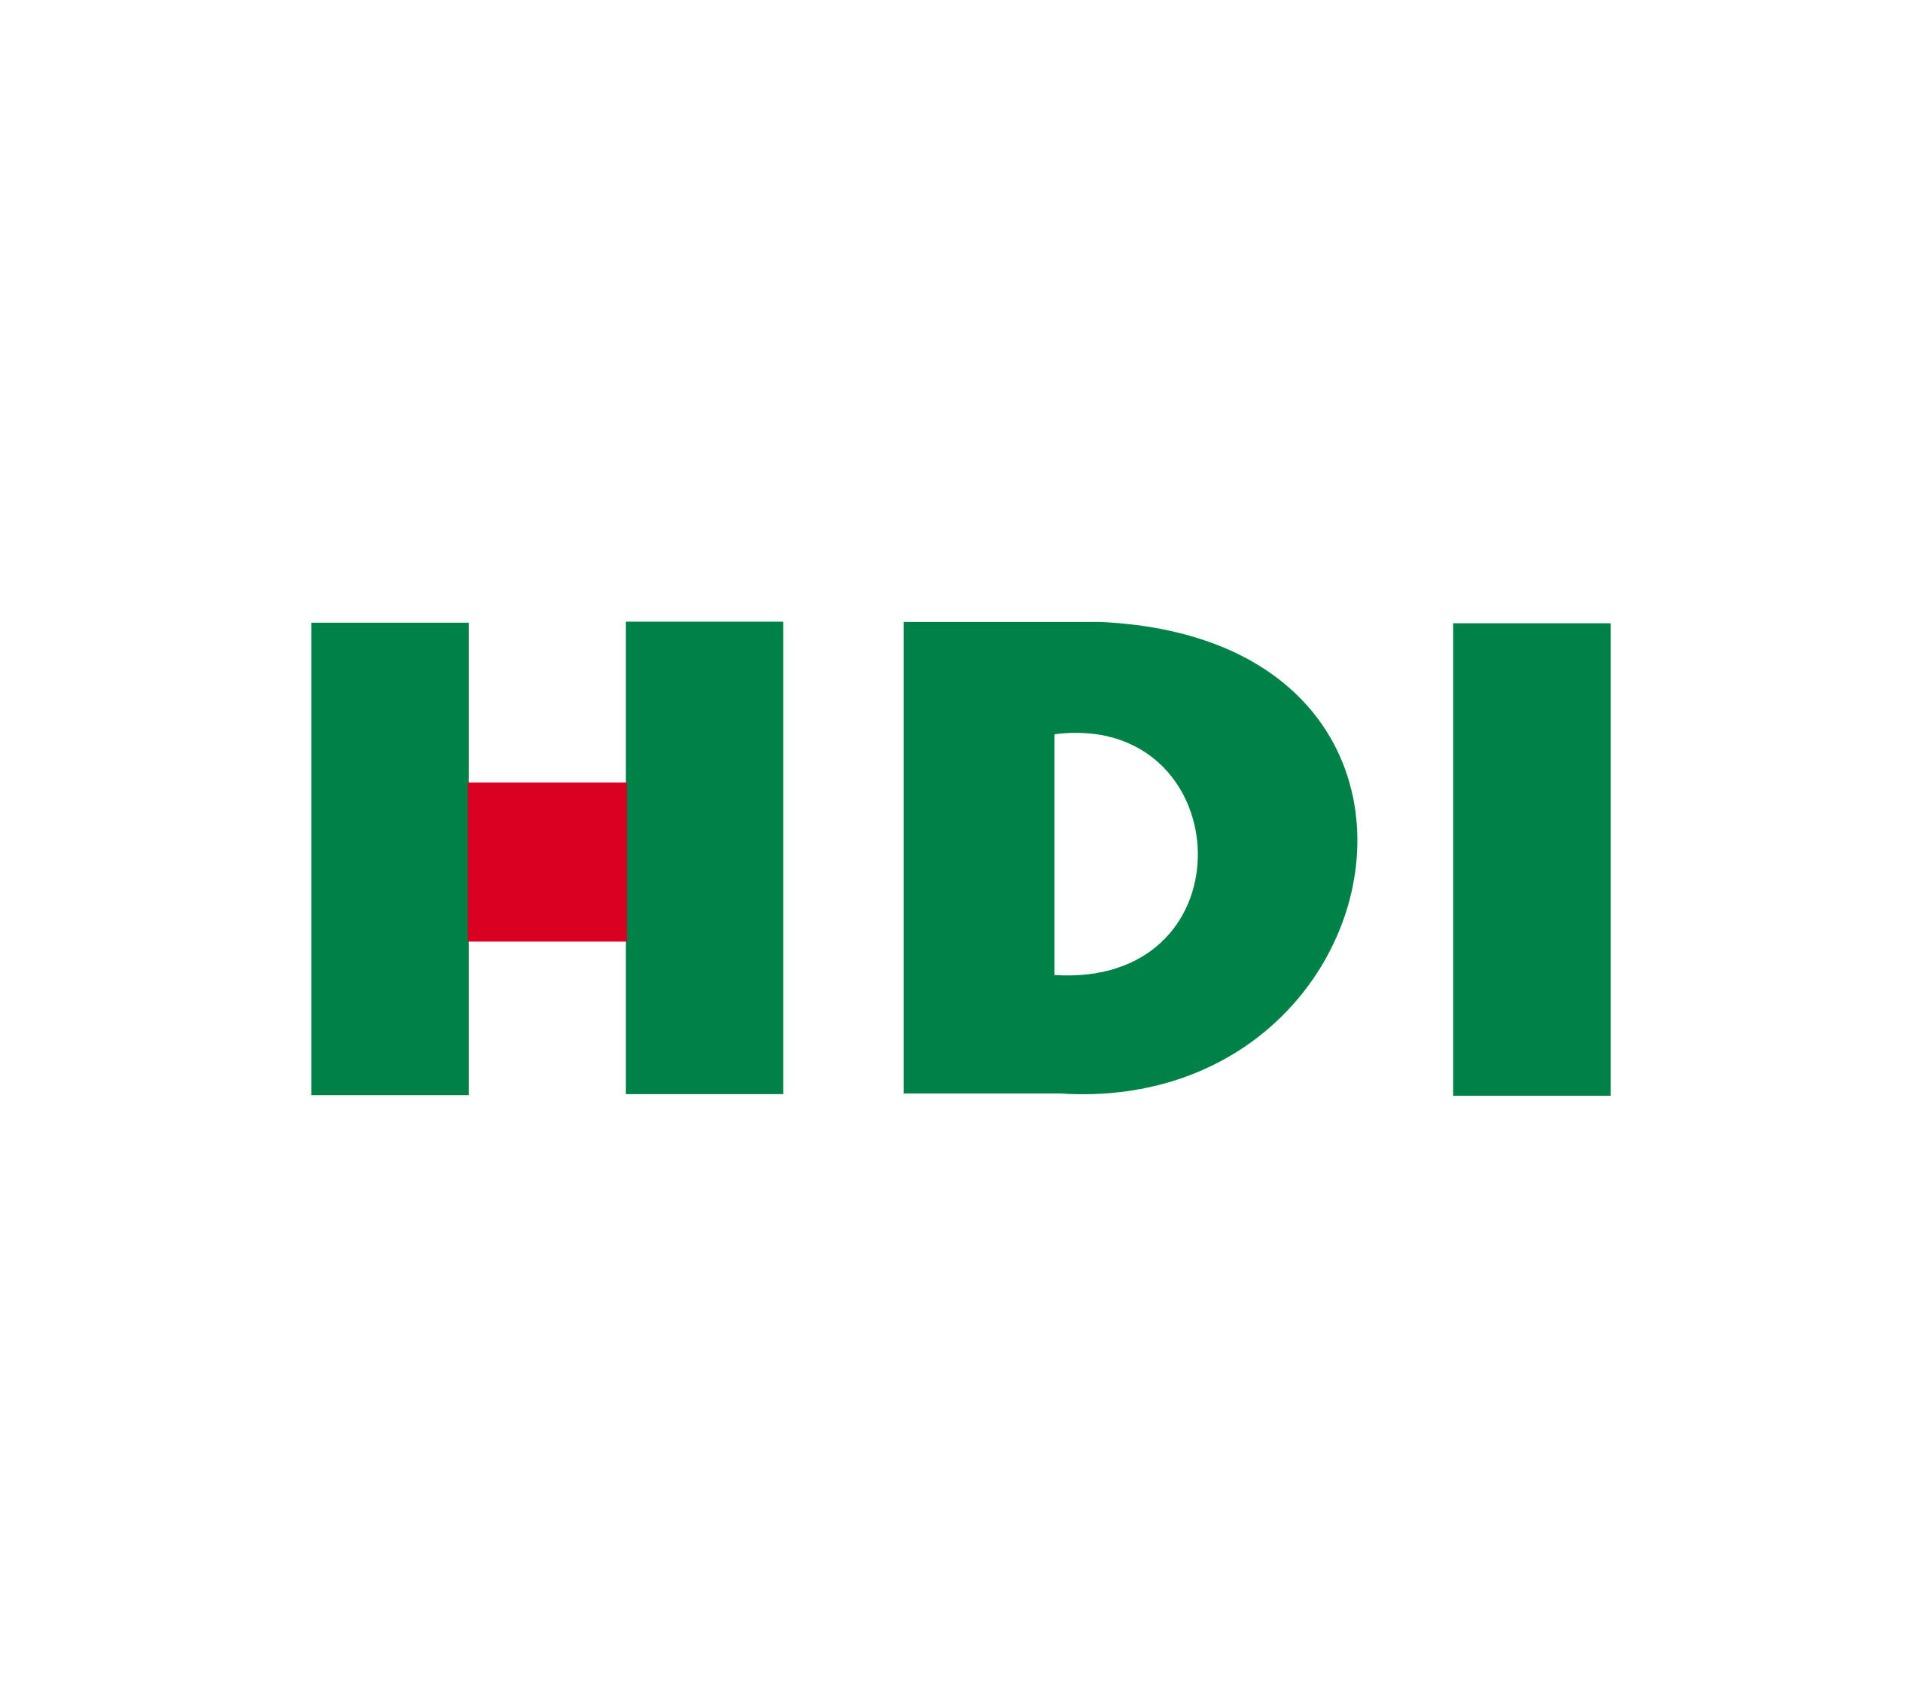 HDI Global